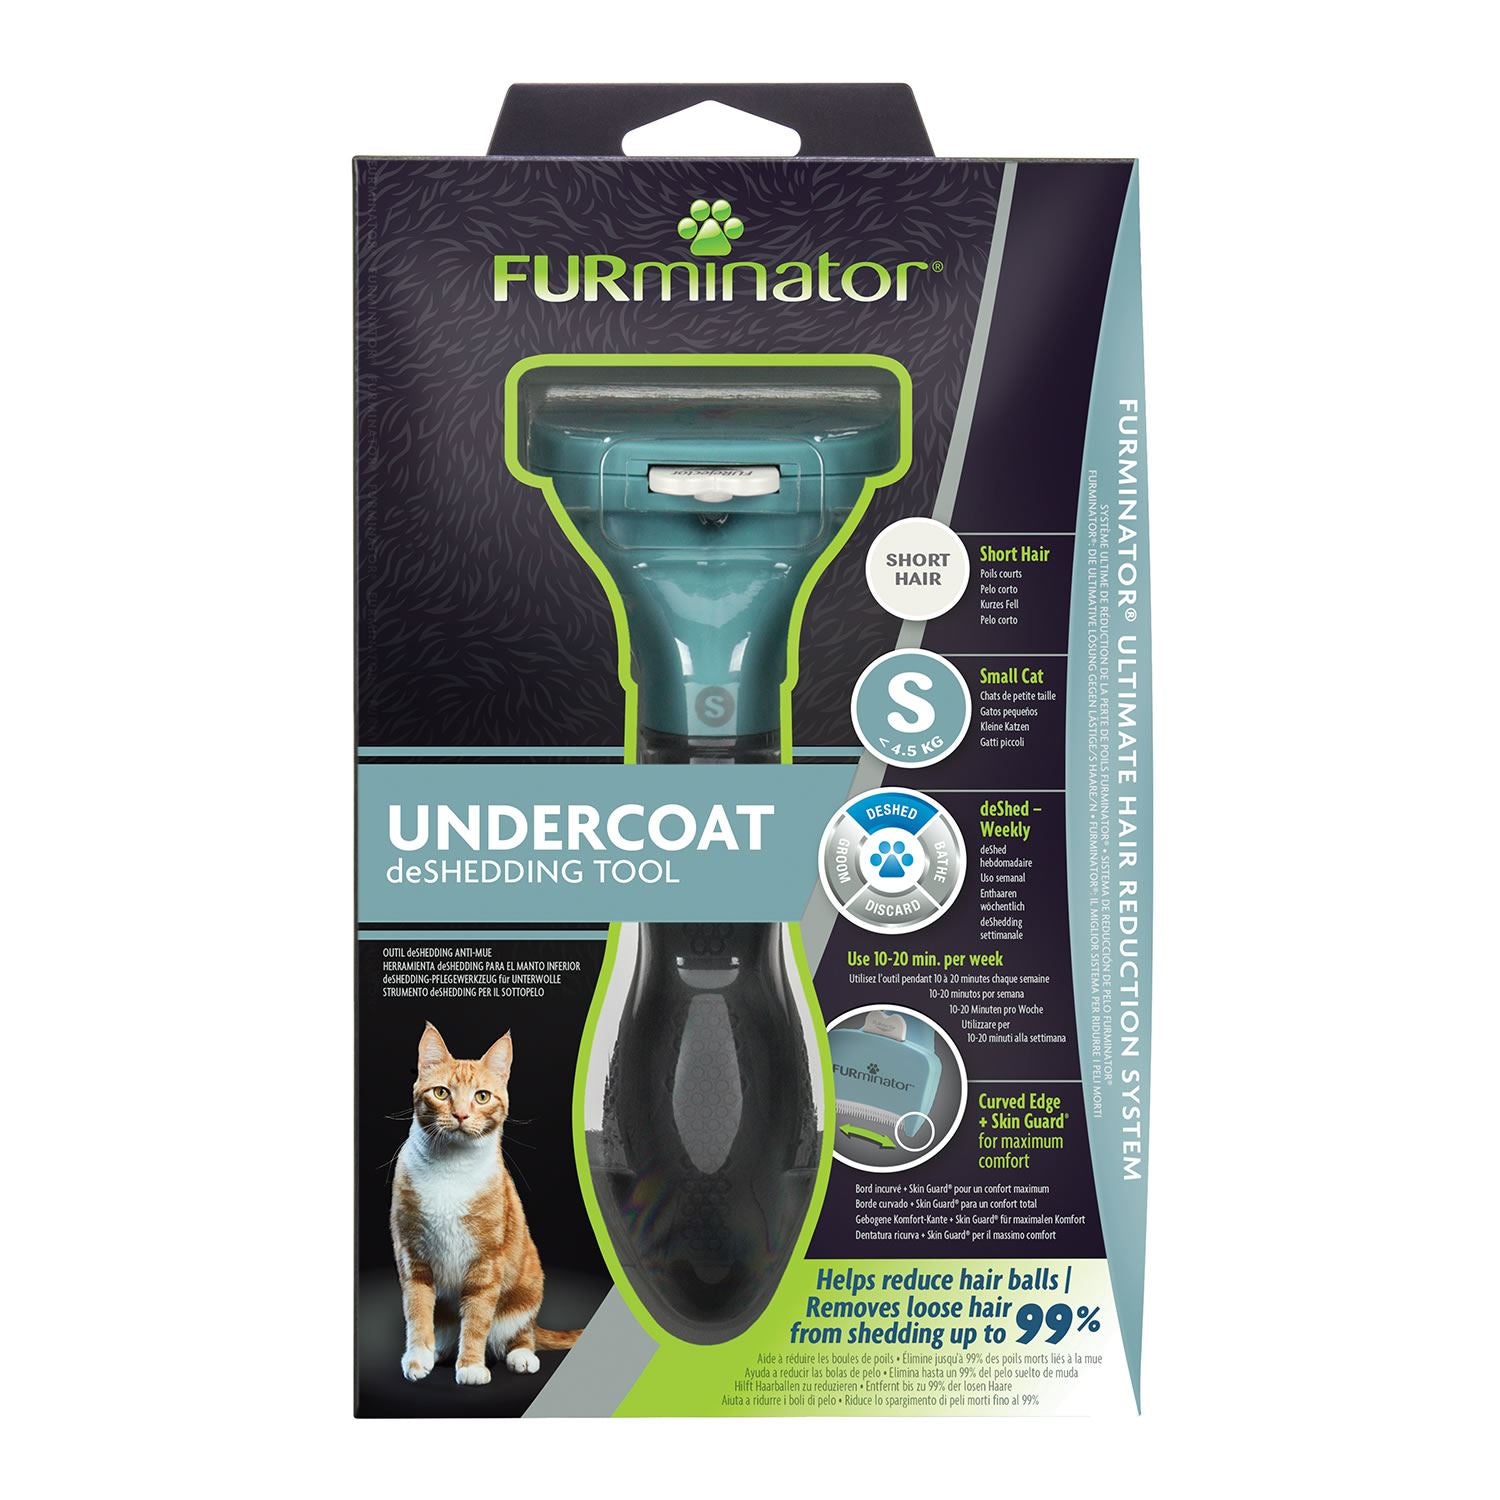 Furminator Undercoat Deshedding Tool For Short Hair Cat - Just Horse Riders